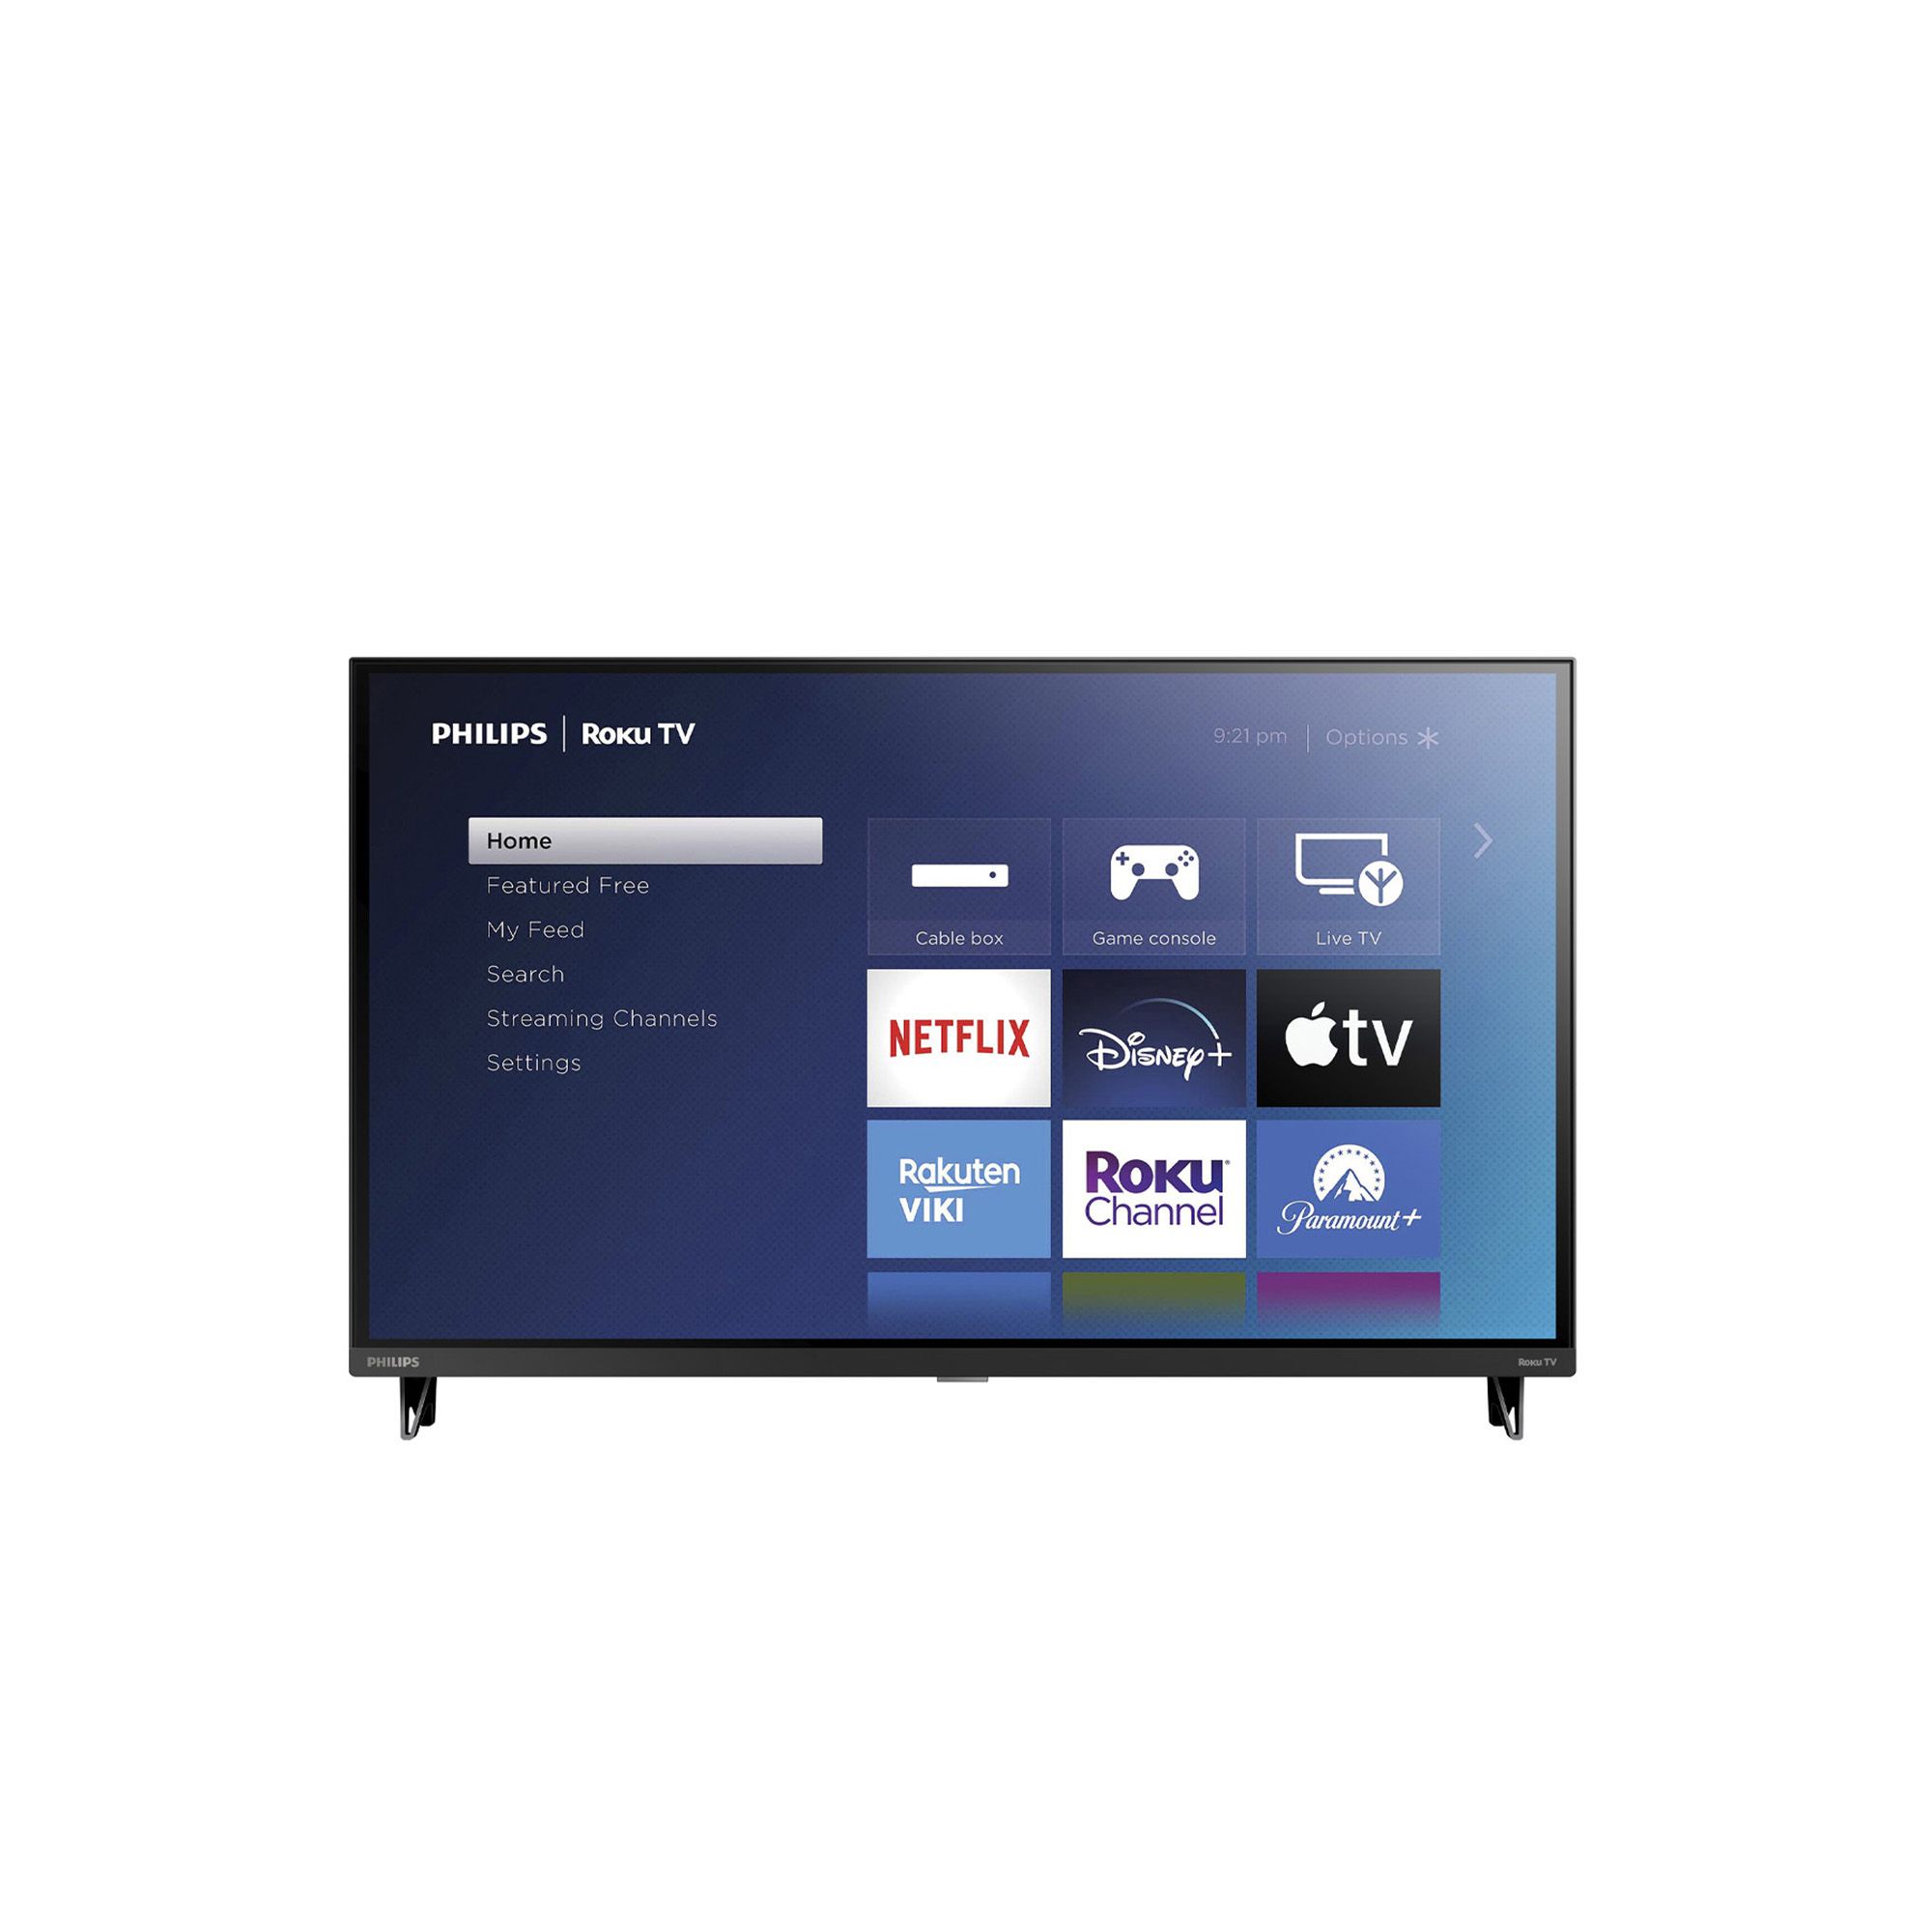 Westinghouse Roku TV models – 32”, 55, 65” 4K Smart TVs